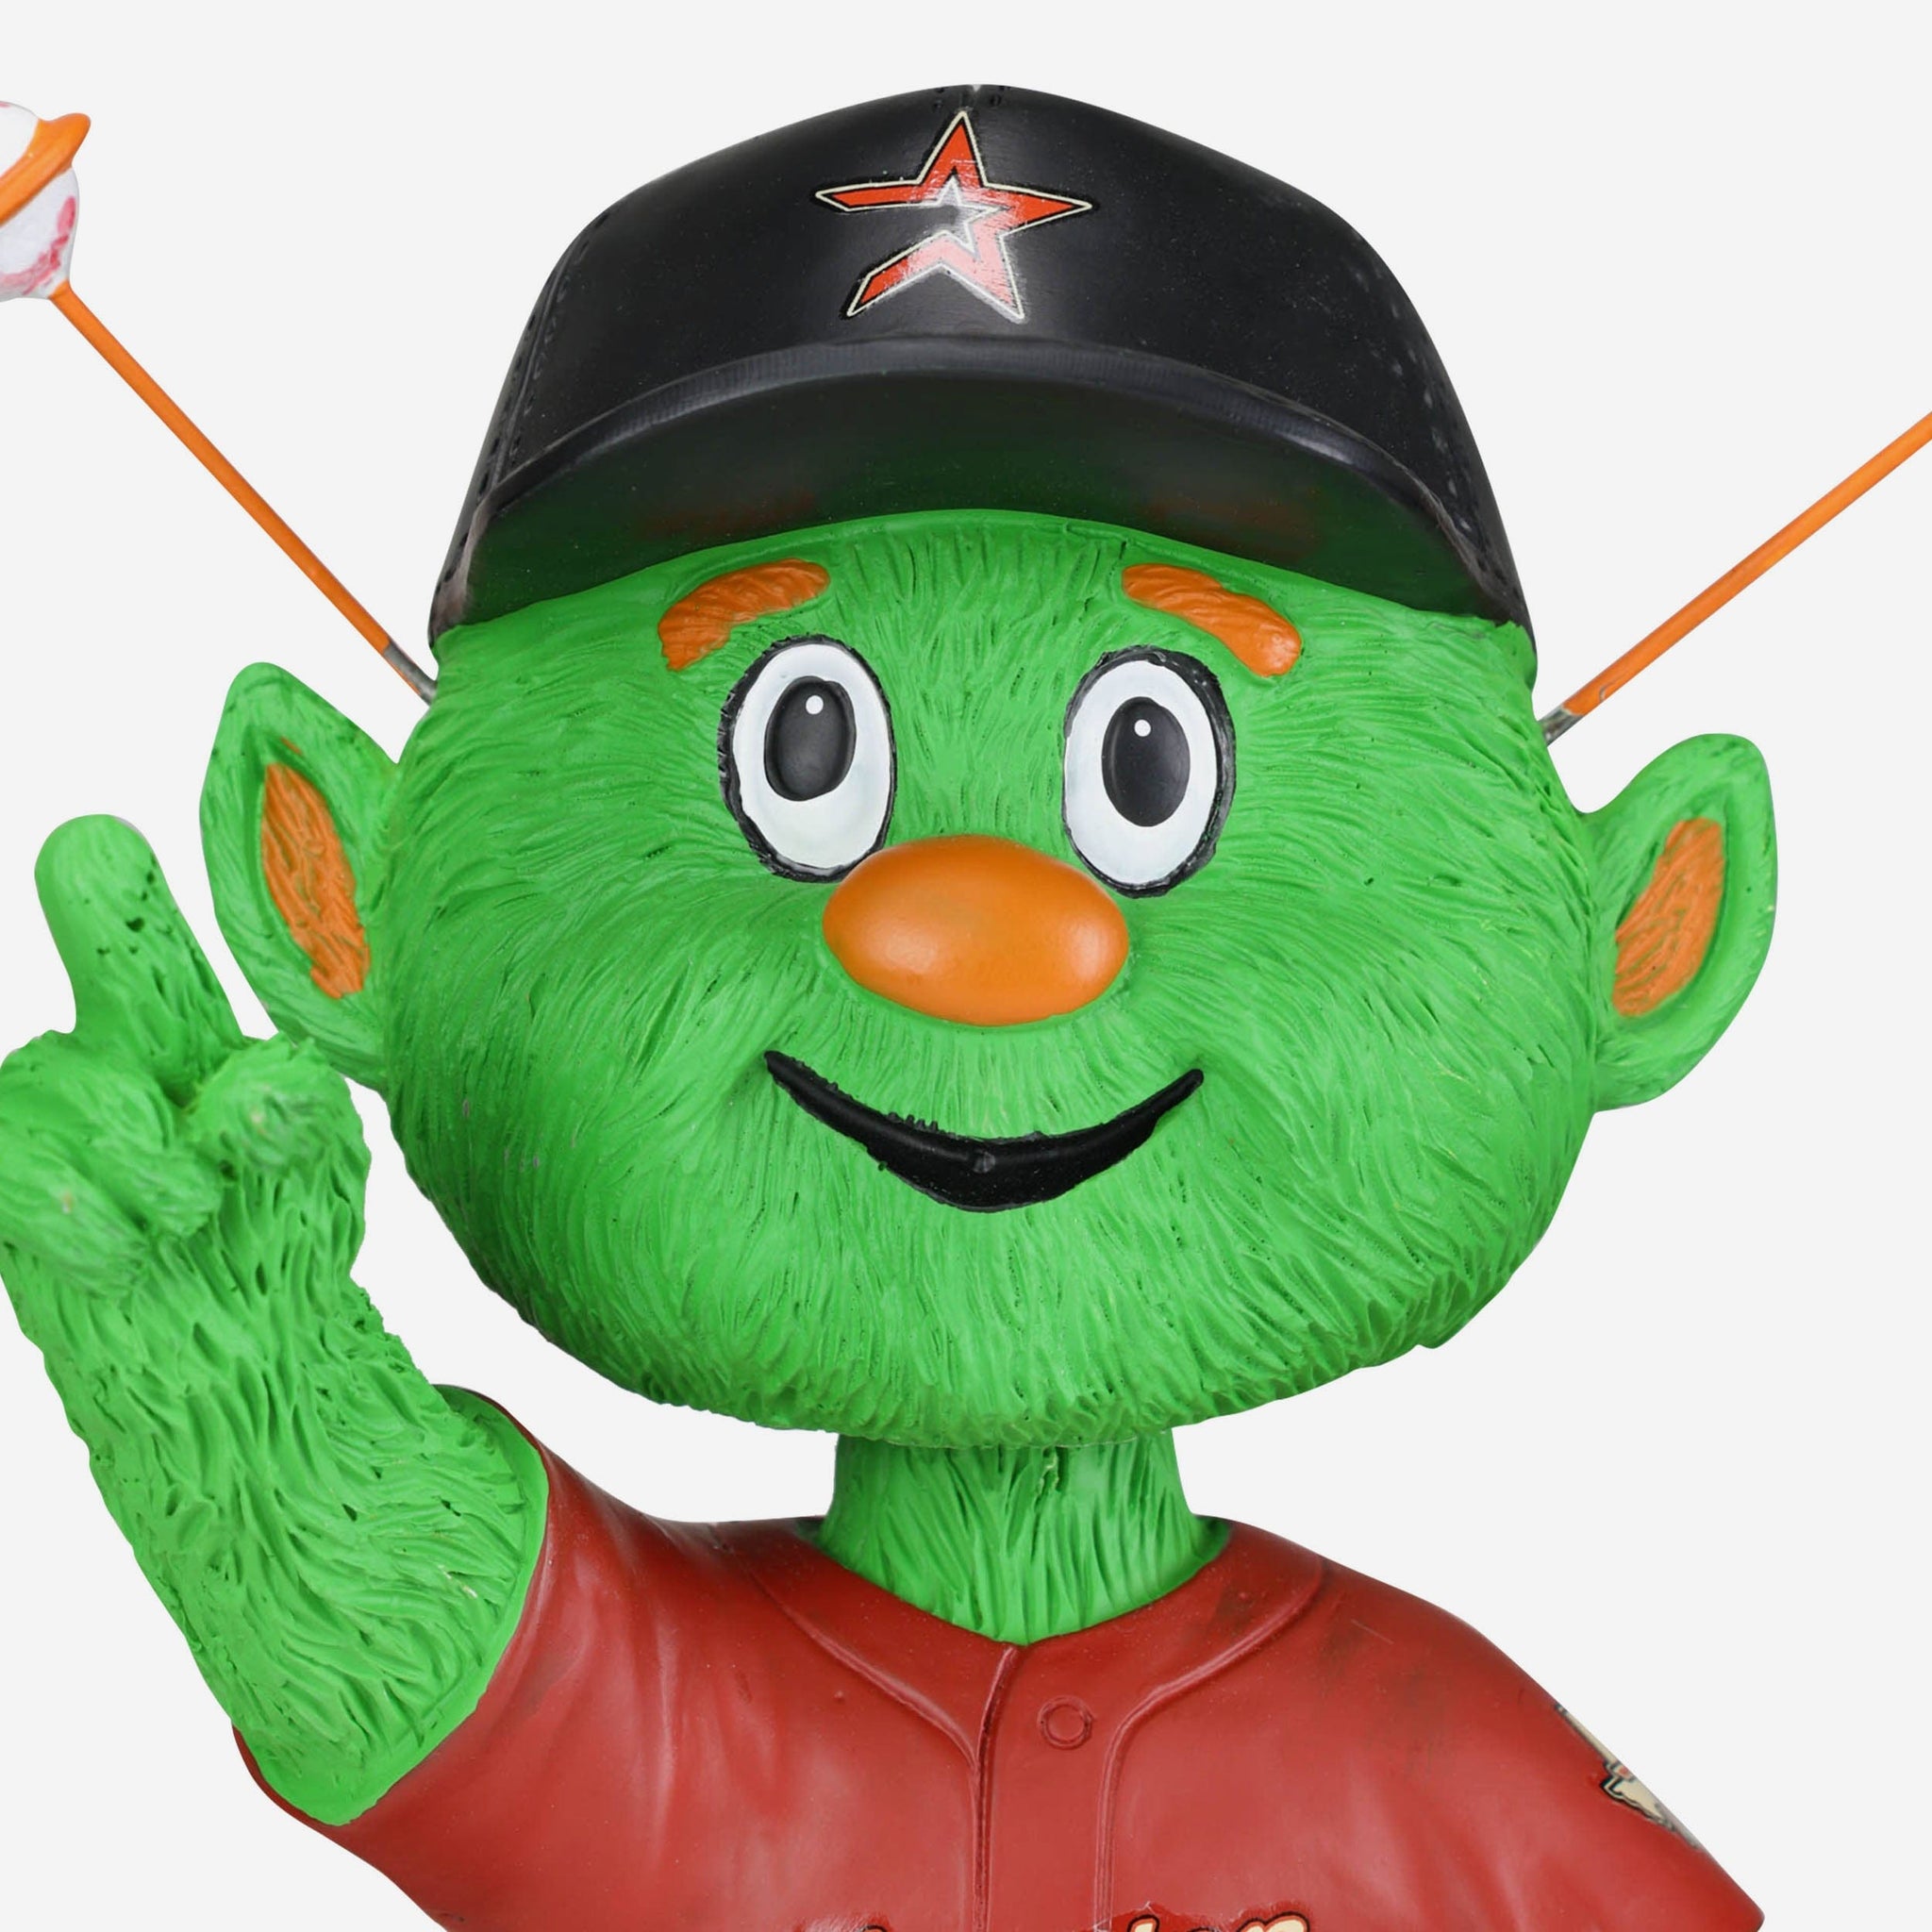 Houston Astros Mascot Orbit  Astros baseball, Houston astros baseball, Houston  astros